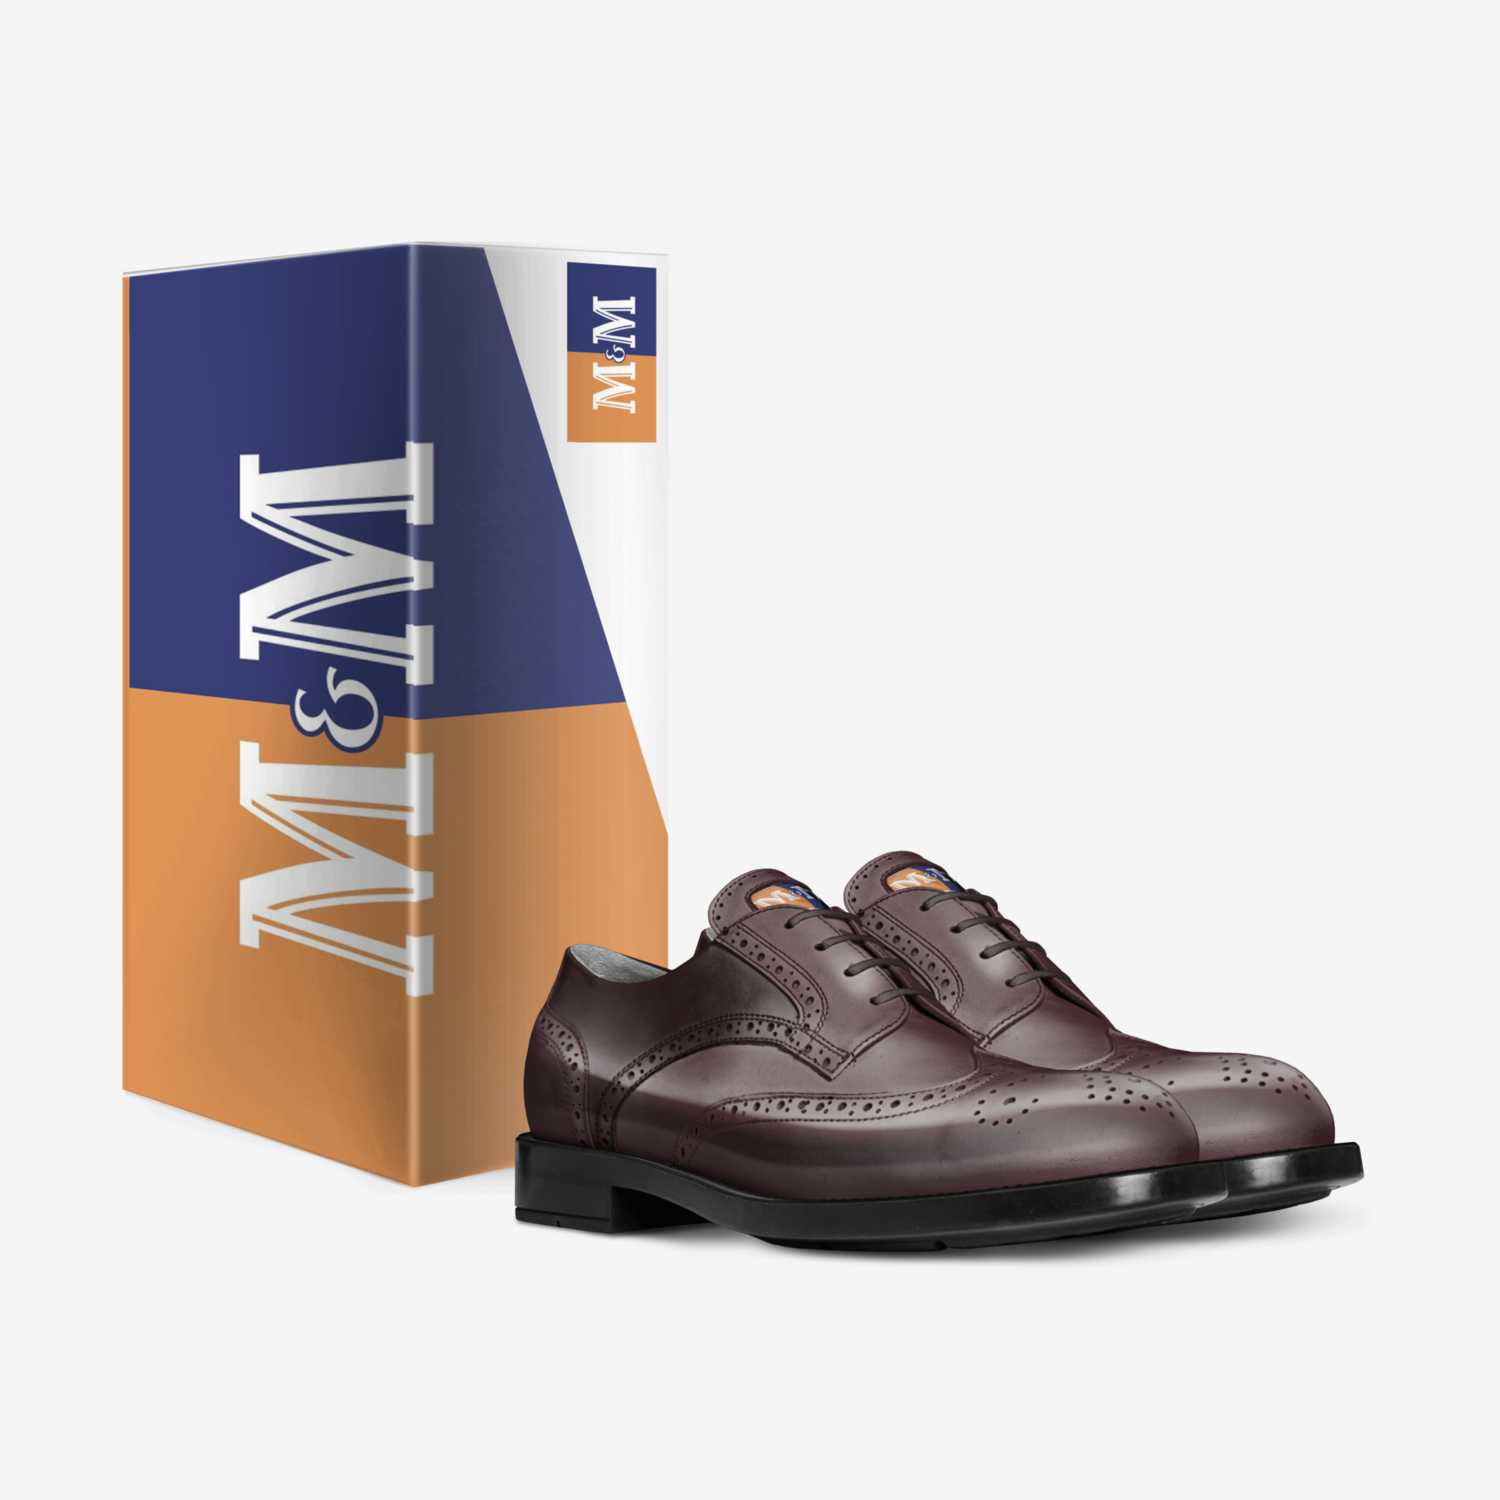 M&M custom made in Italy shoes by Melih Güçlü | Box view